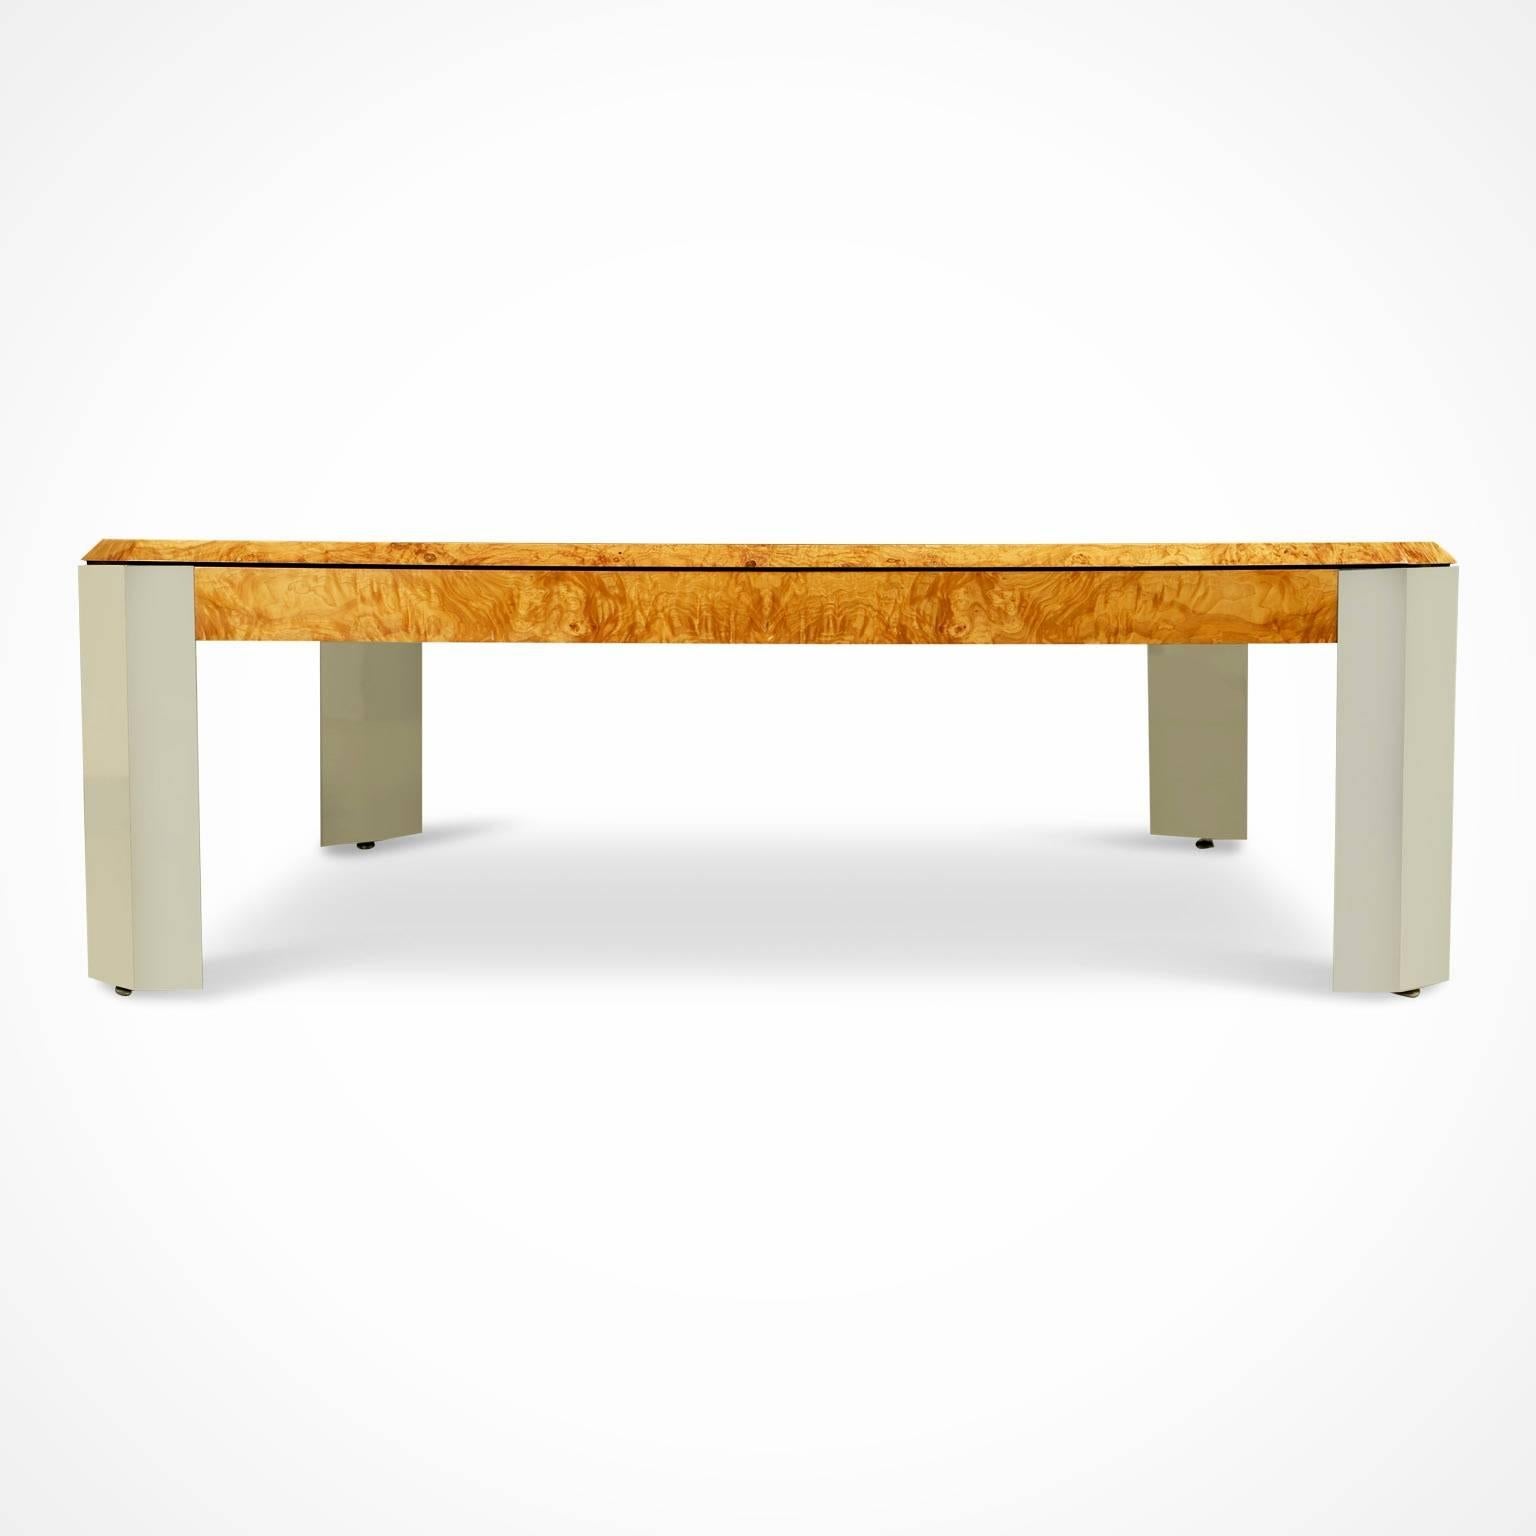 burled wood coffee table